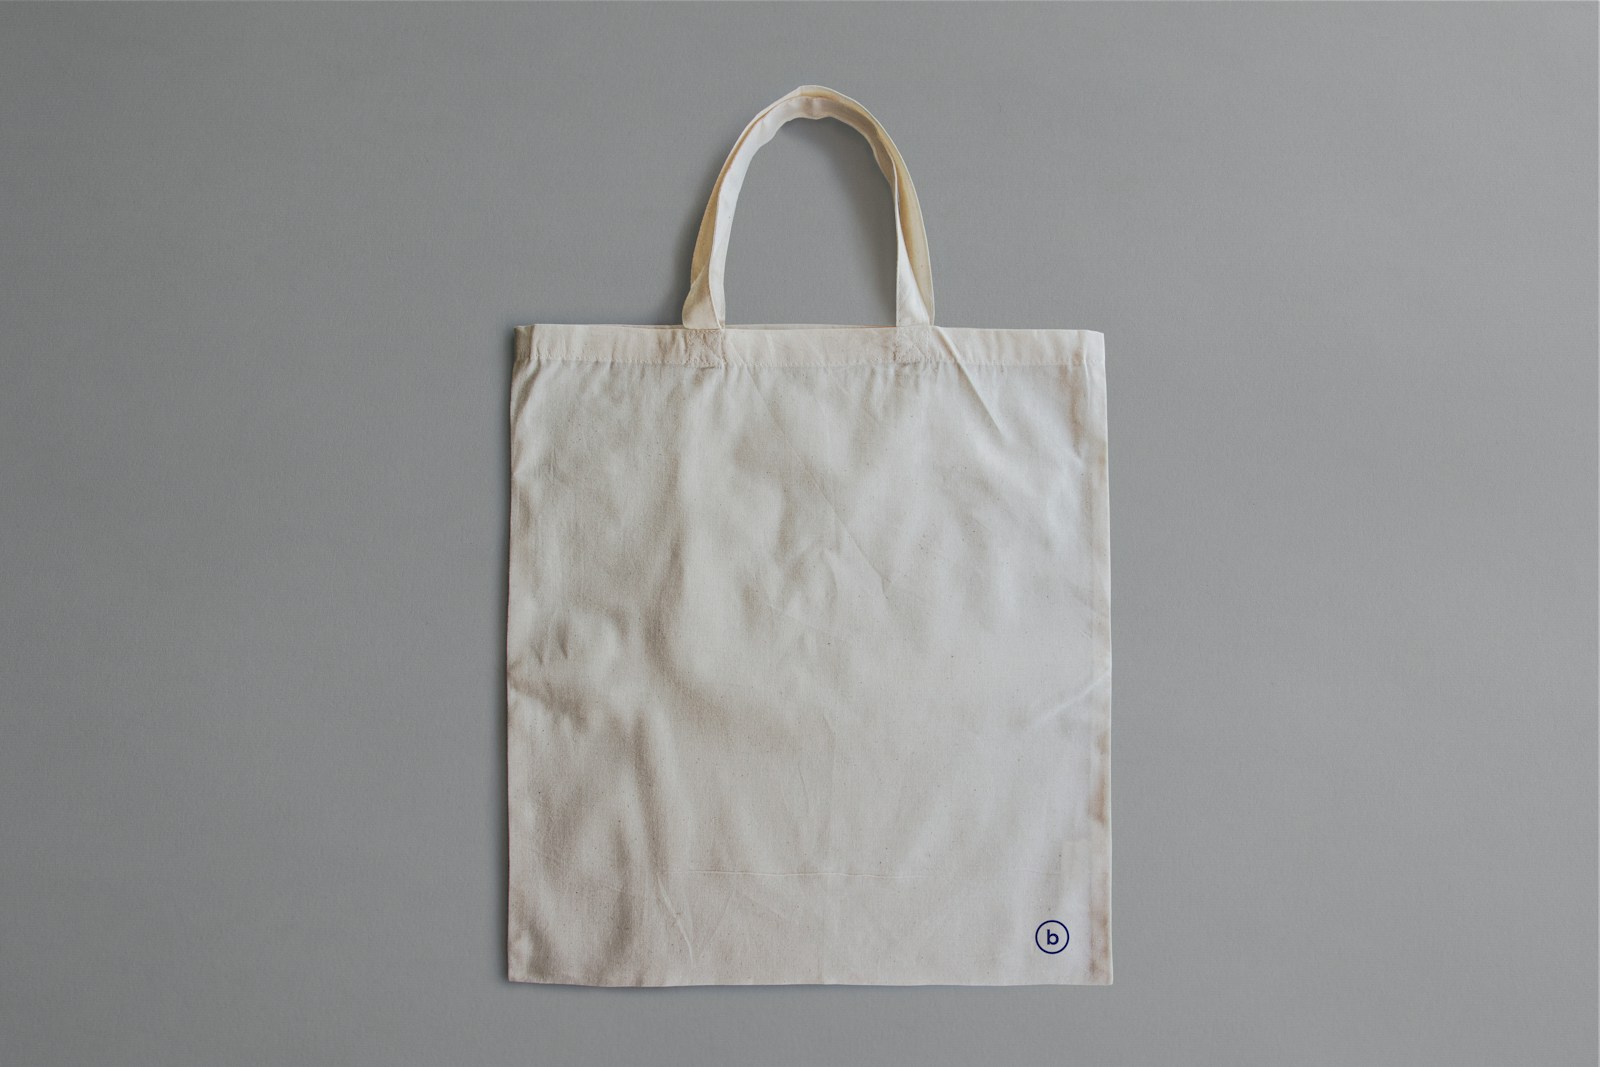 white reusable bag on gray surface